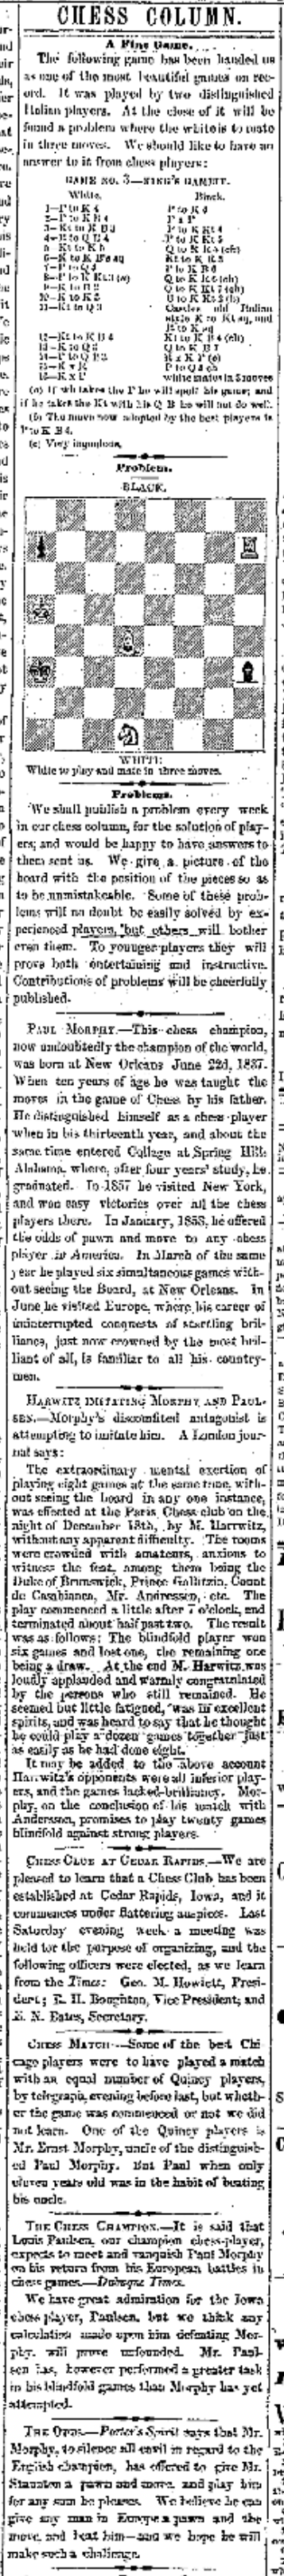 1859.01.20-01 Davenport Daily Gazette.png